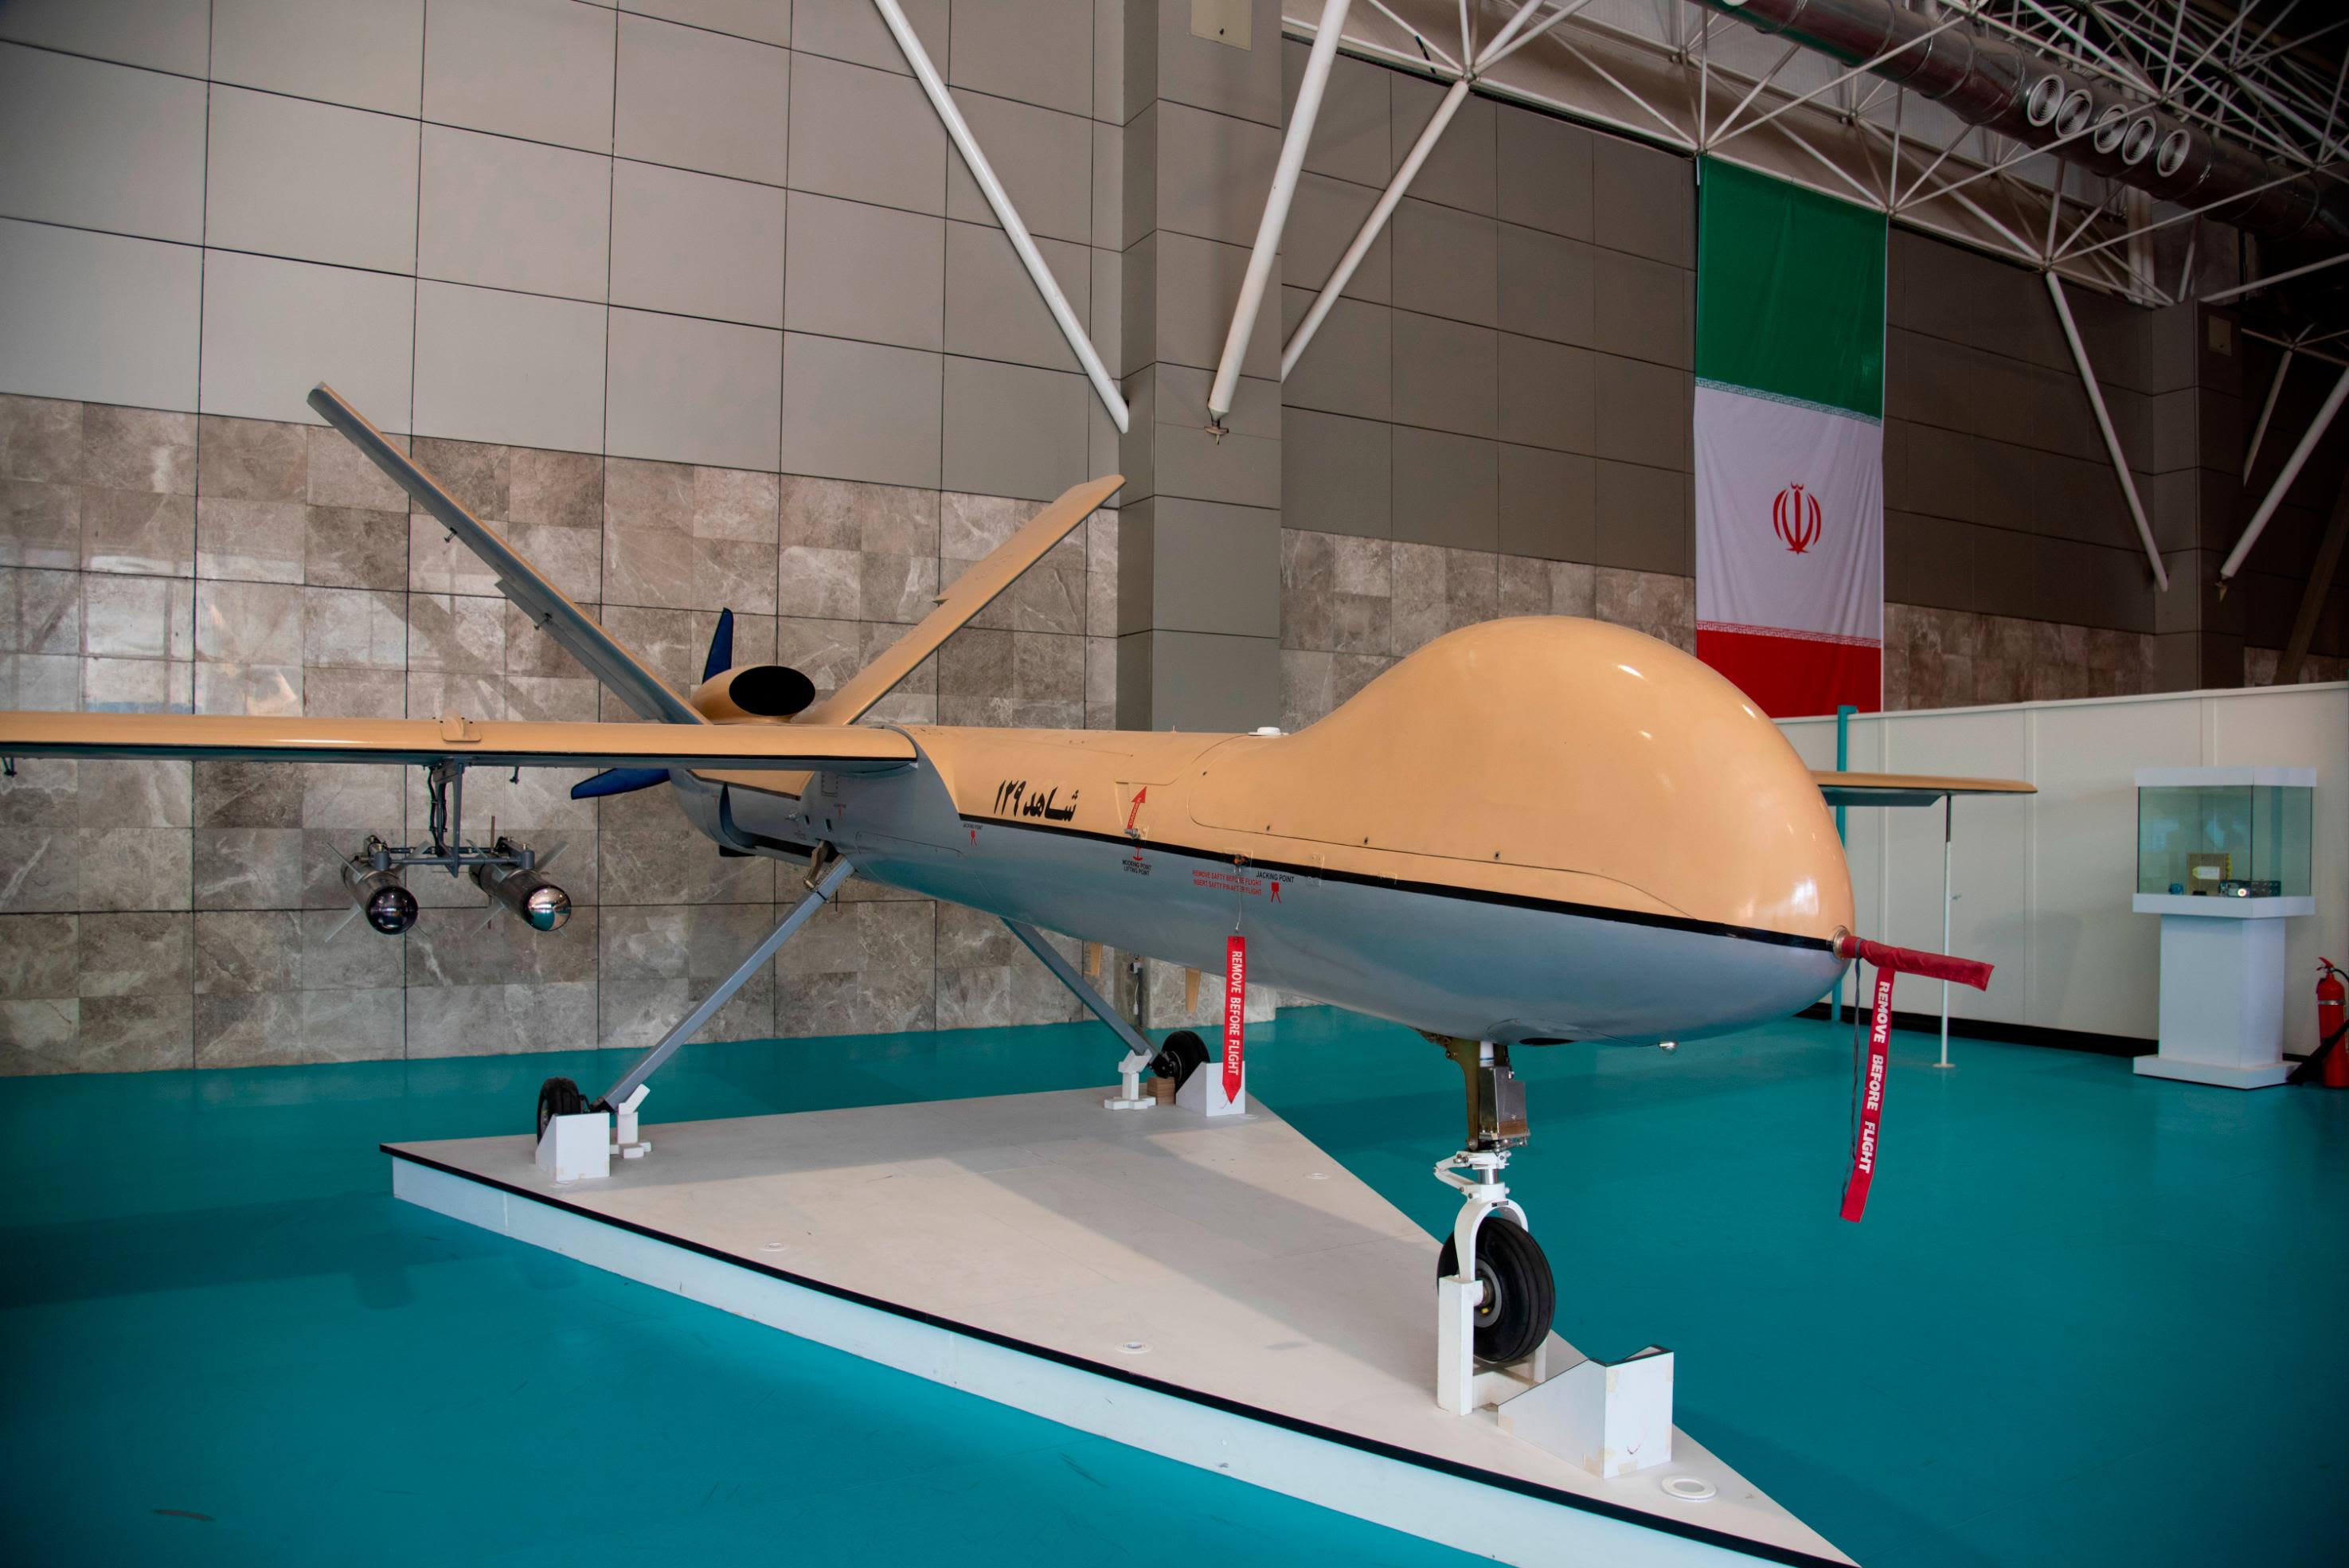 US believes Russians have begun training on Iranian drones | CNN Politics